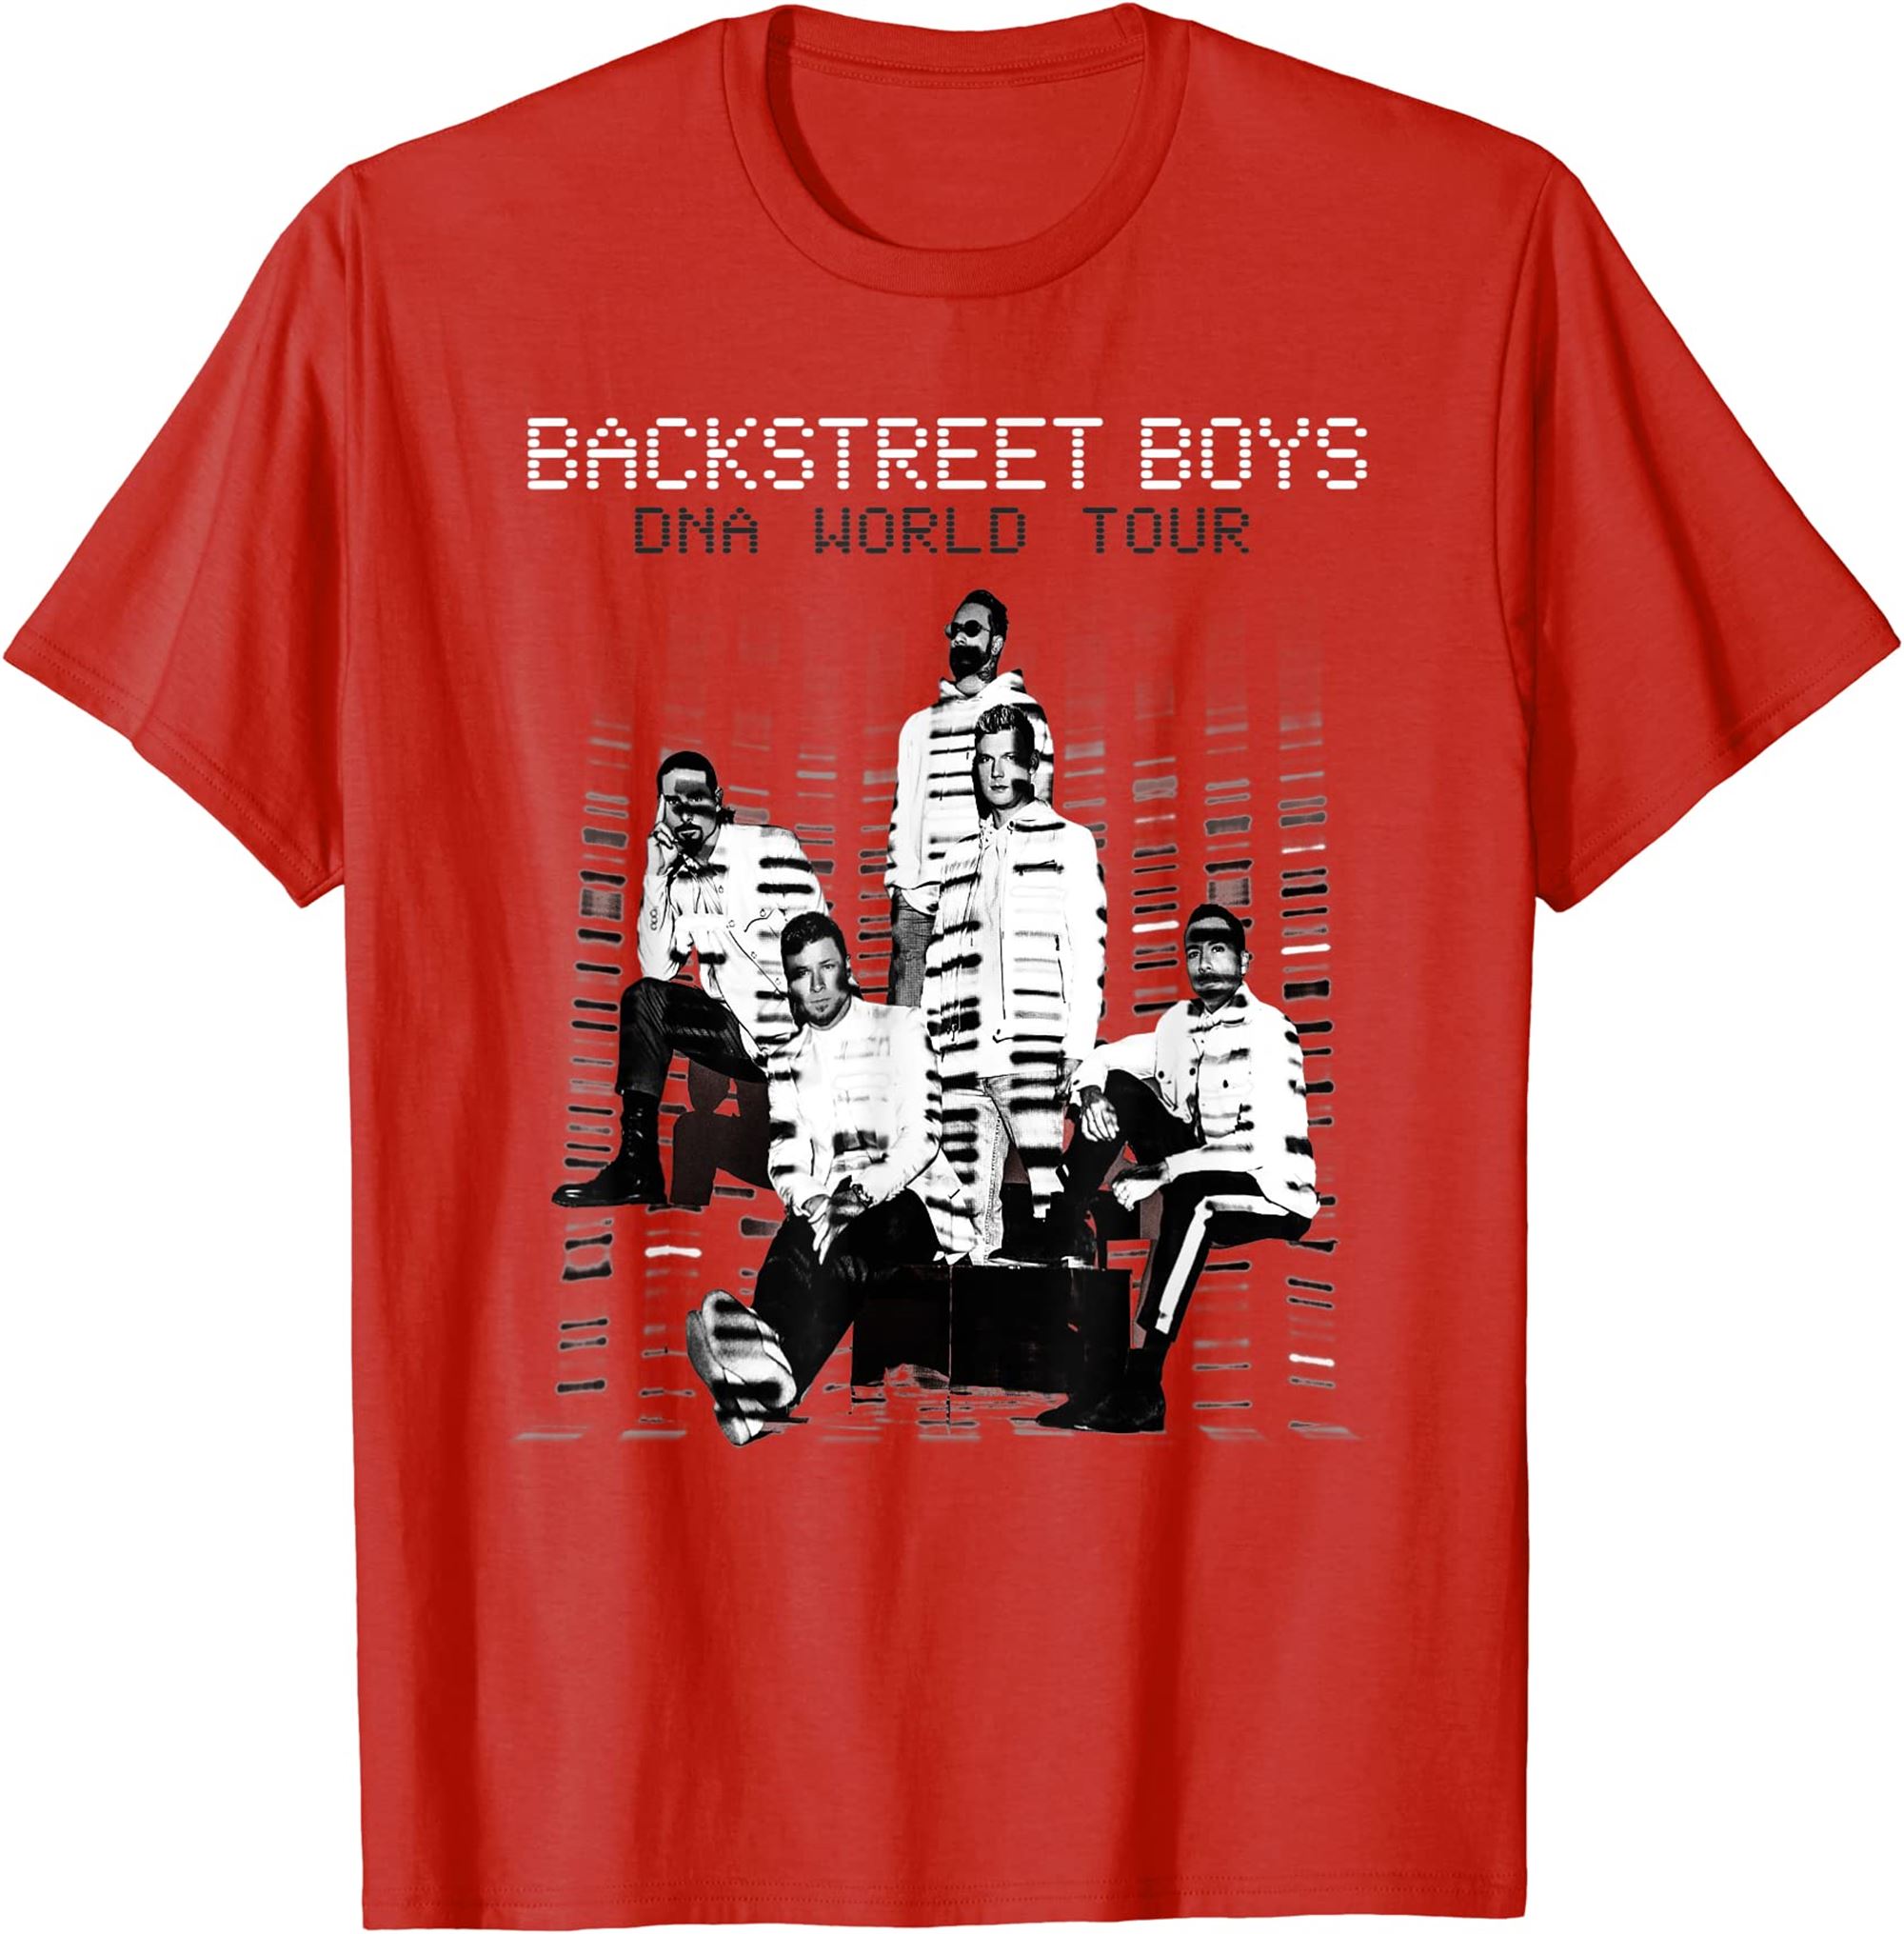 Backstreet Boys Dna Tour 2022 Cityback T-shirt Full Size Up To 5xl